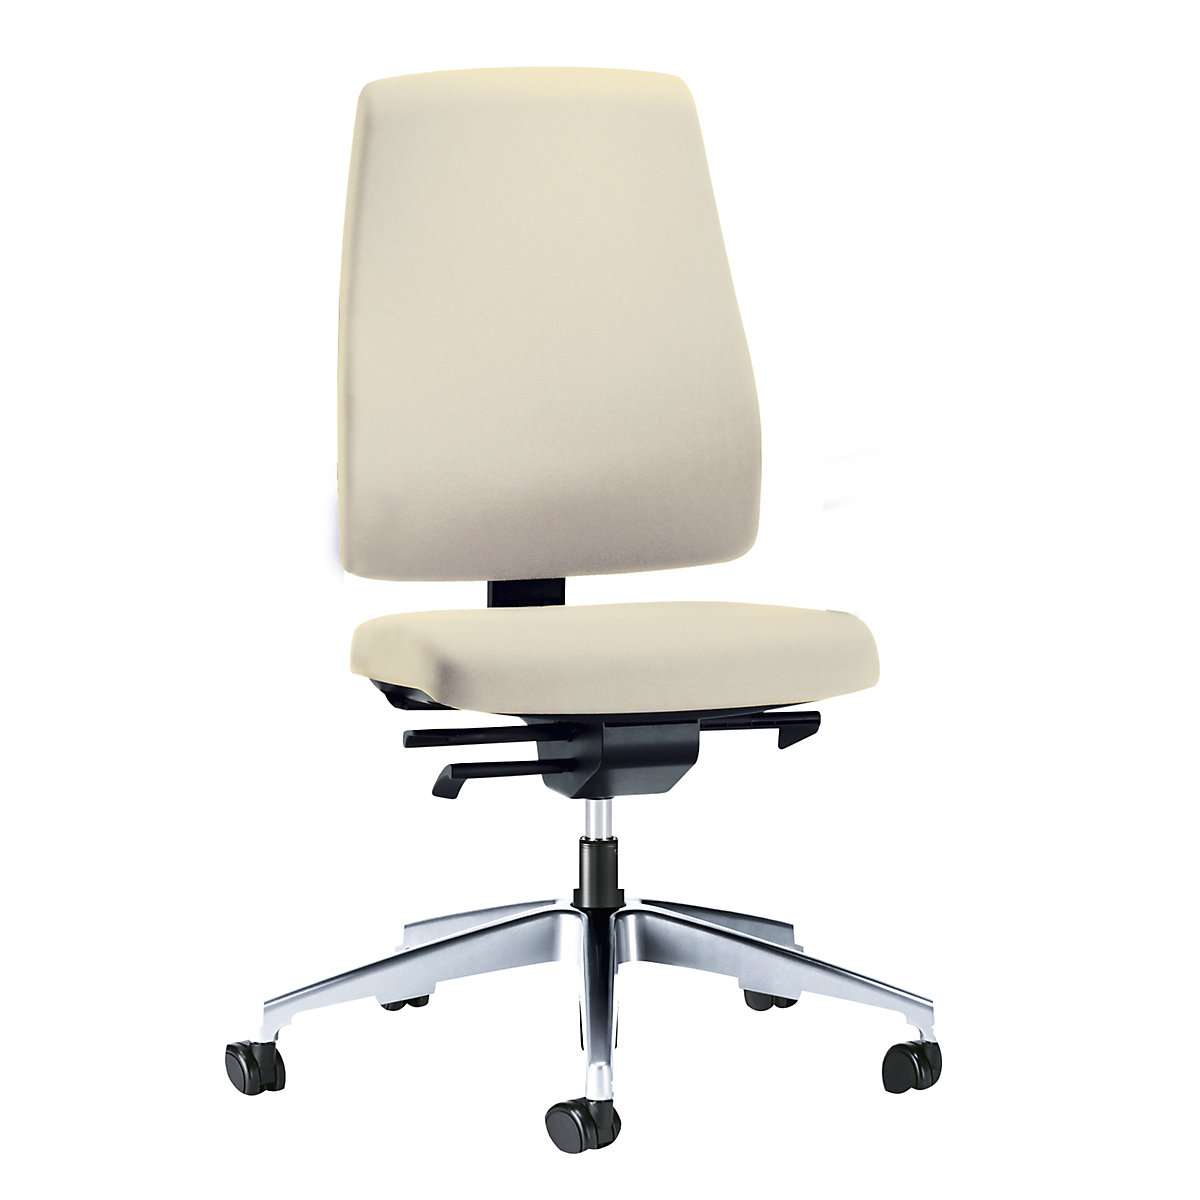 GOAL office swivel chair, back rest height 530 mm – interstuhl, polished frame, with soft castors, beige, seat depth 410 – 460 mm-6